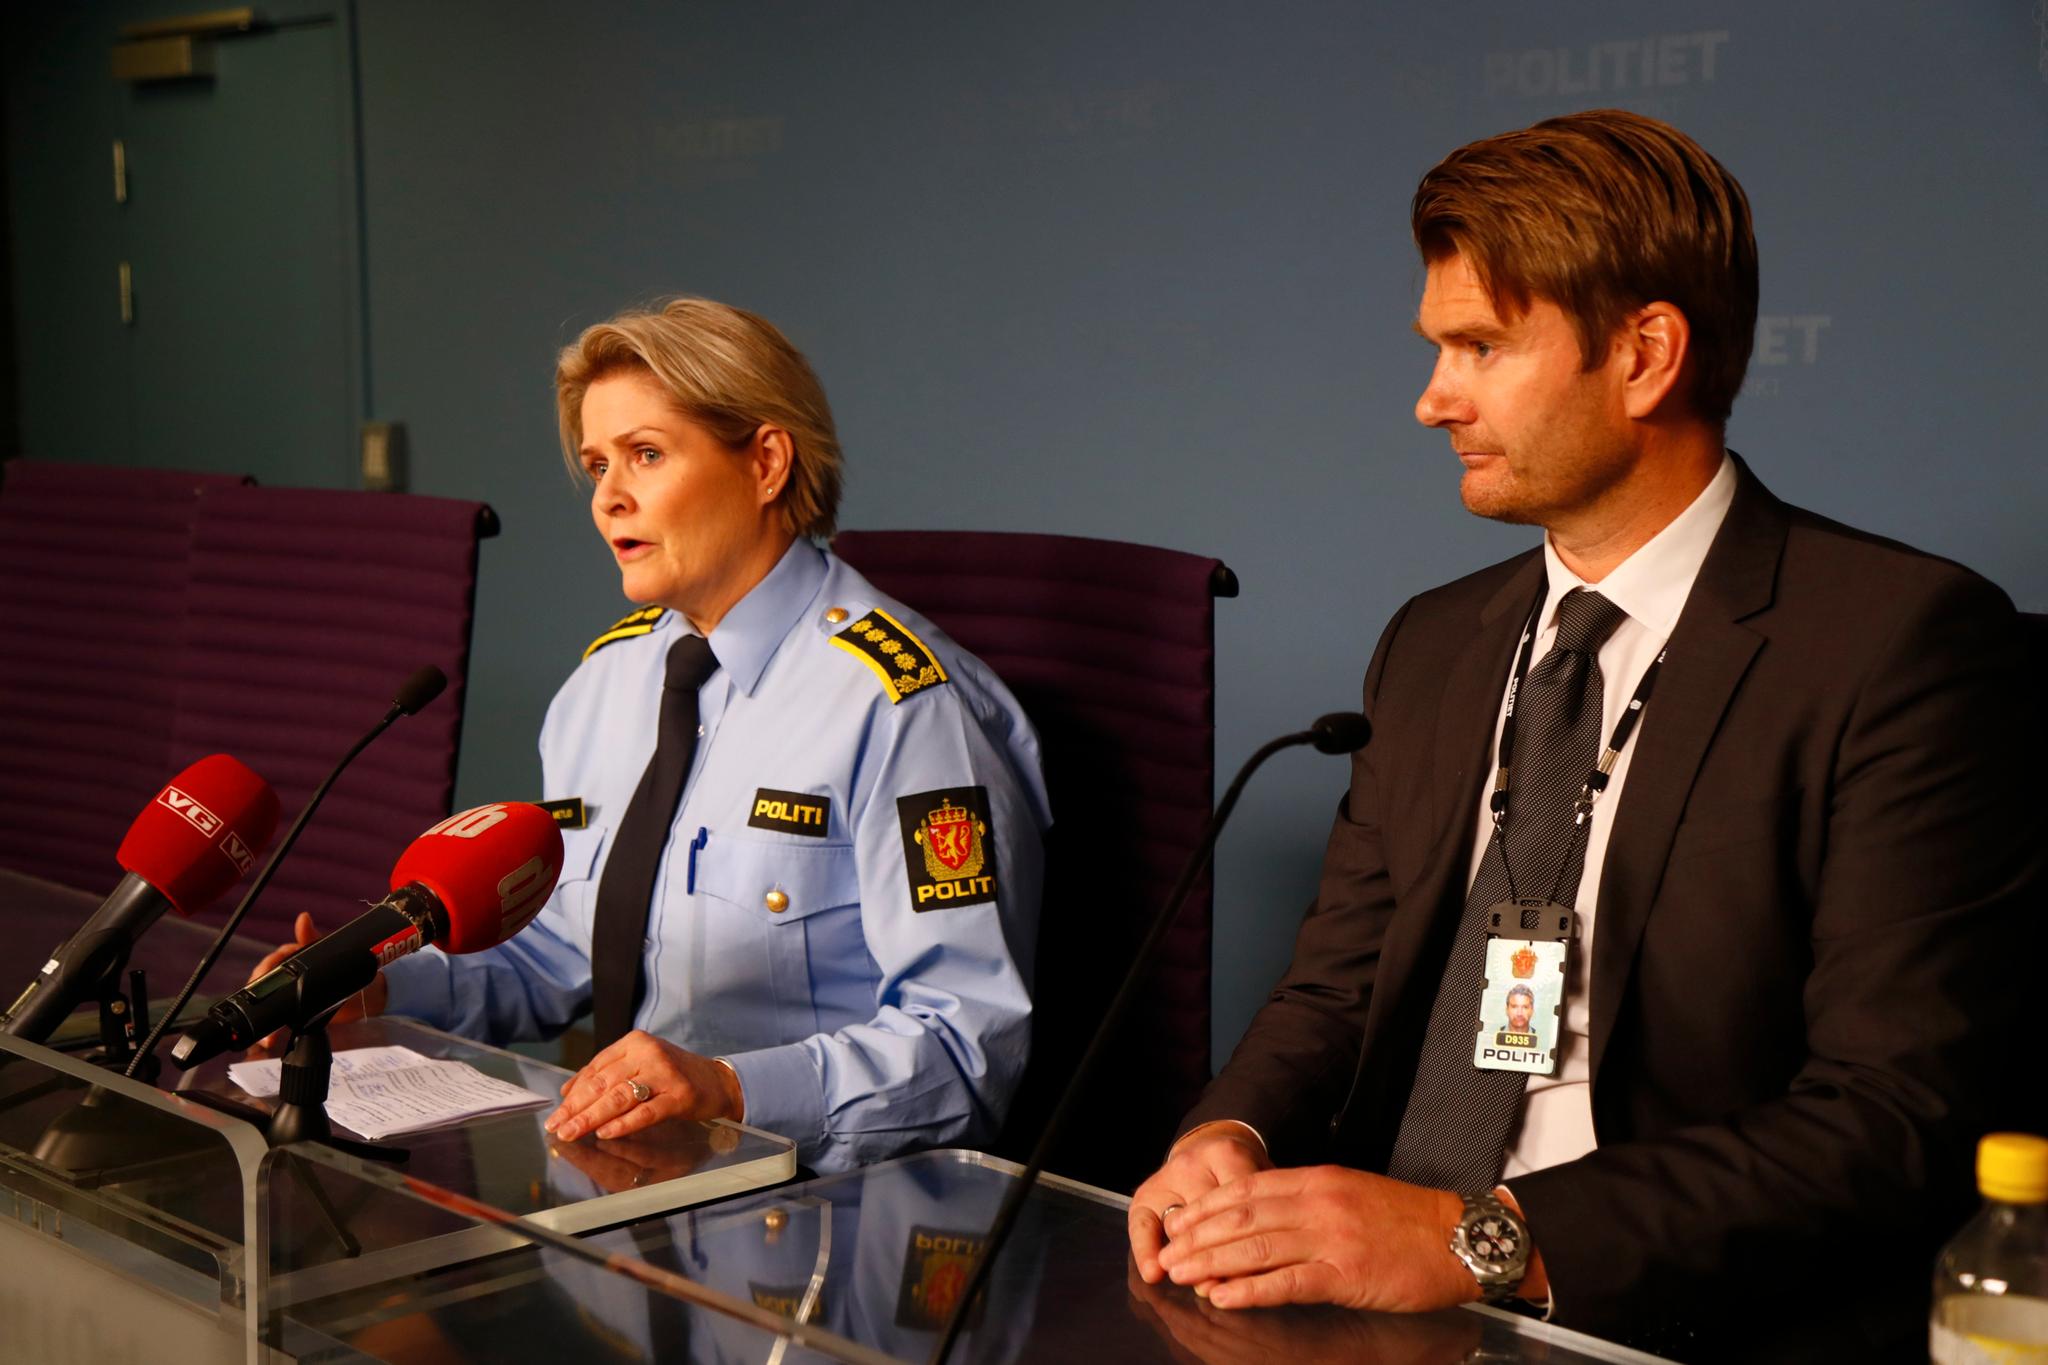  Politiinspektør Grete Lien Metlid og politiadvokat Christian Hatlo under pressekonferansen tirsdag kveld. 